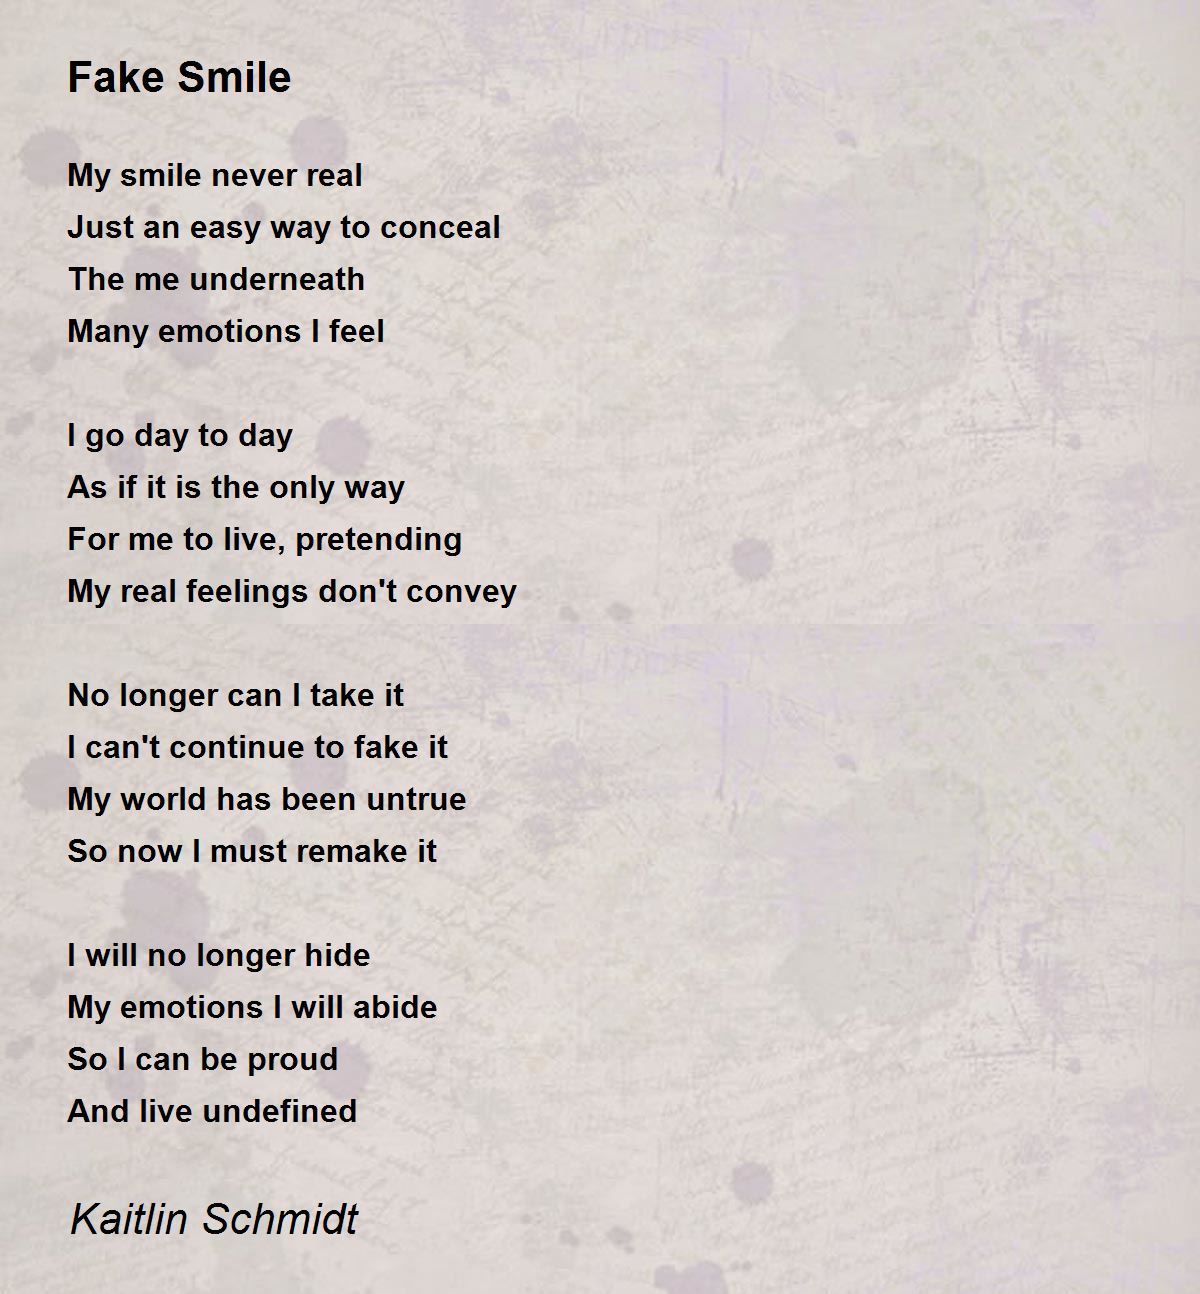 Fake Smile - Fake Smile Poem by Kaitlin Schmidt